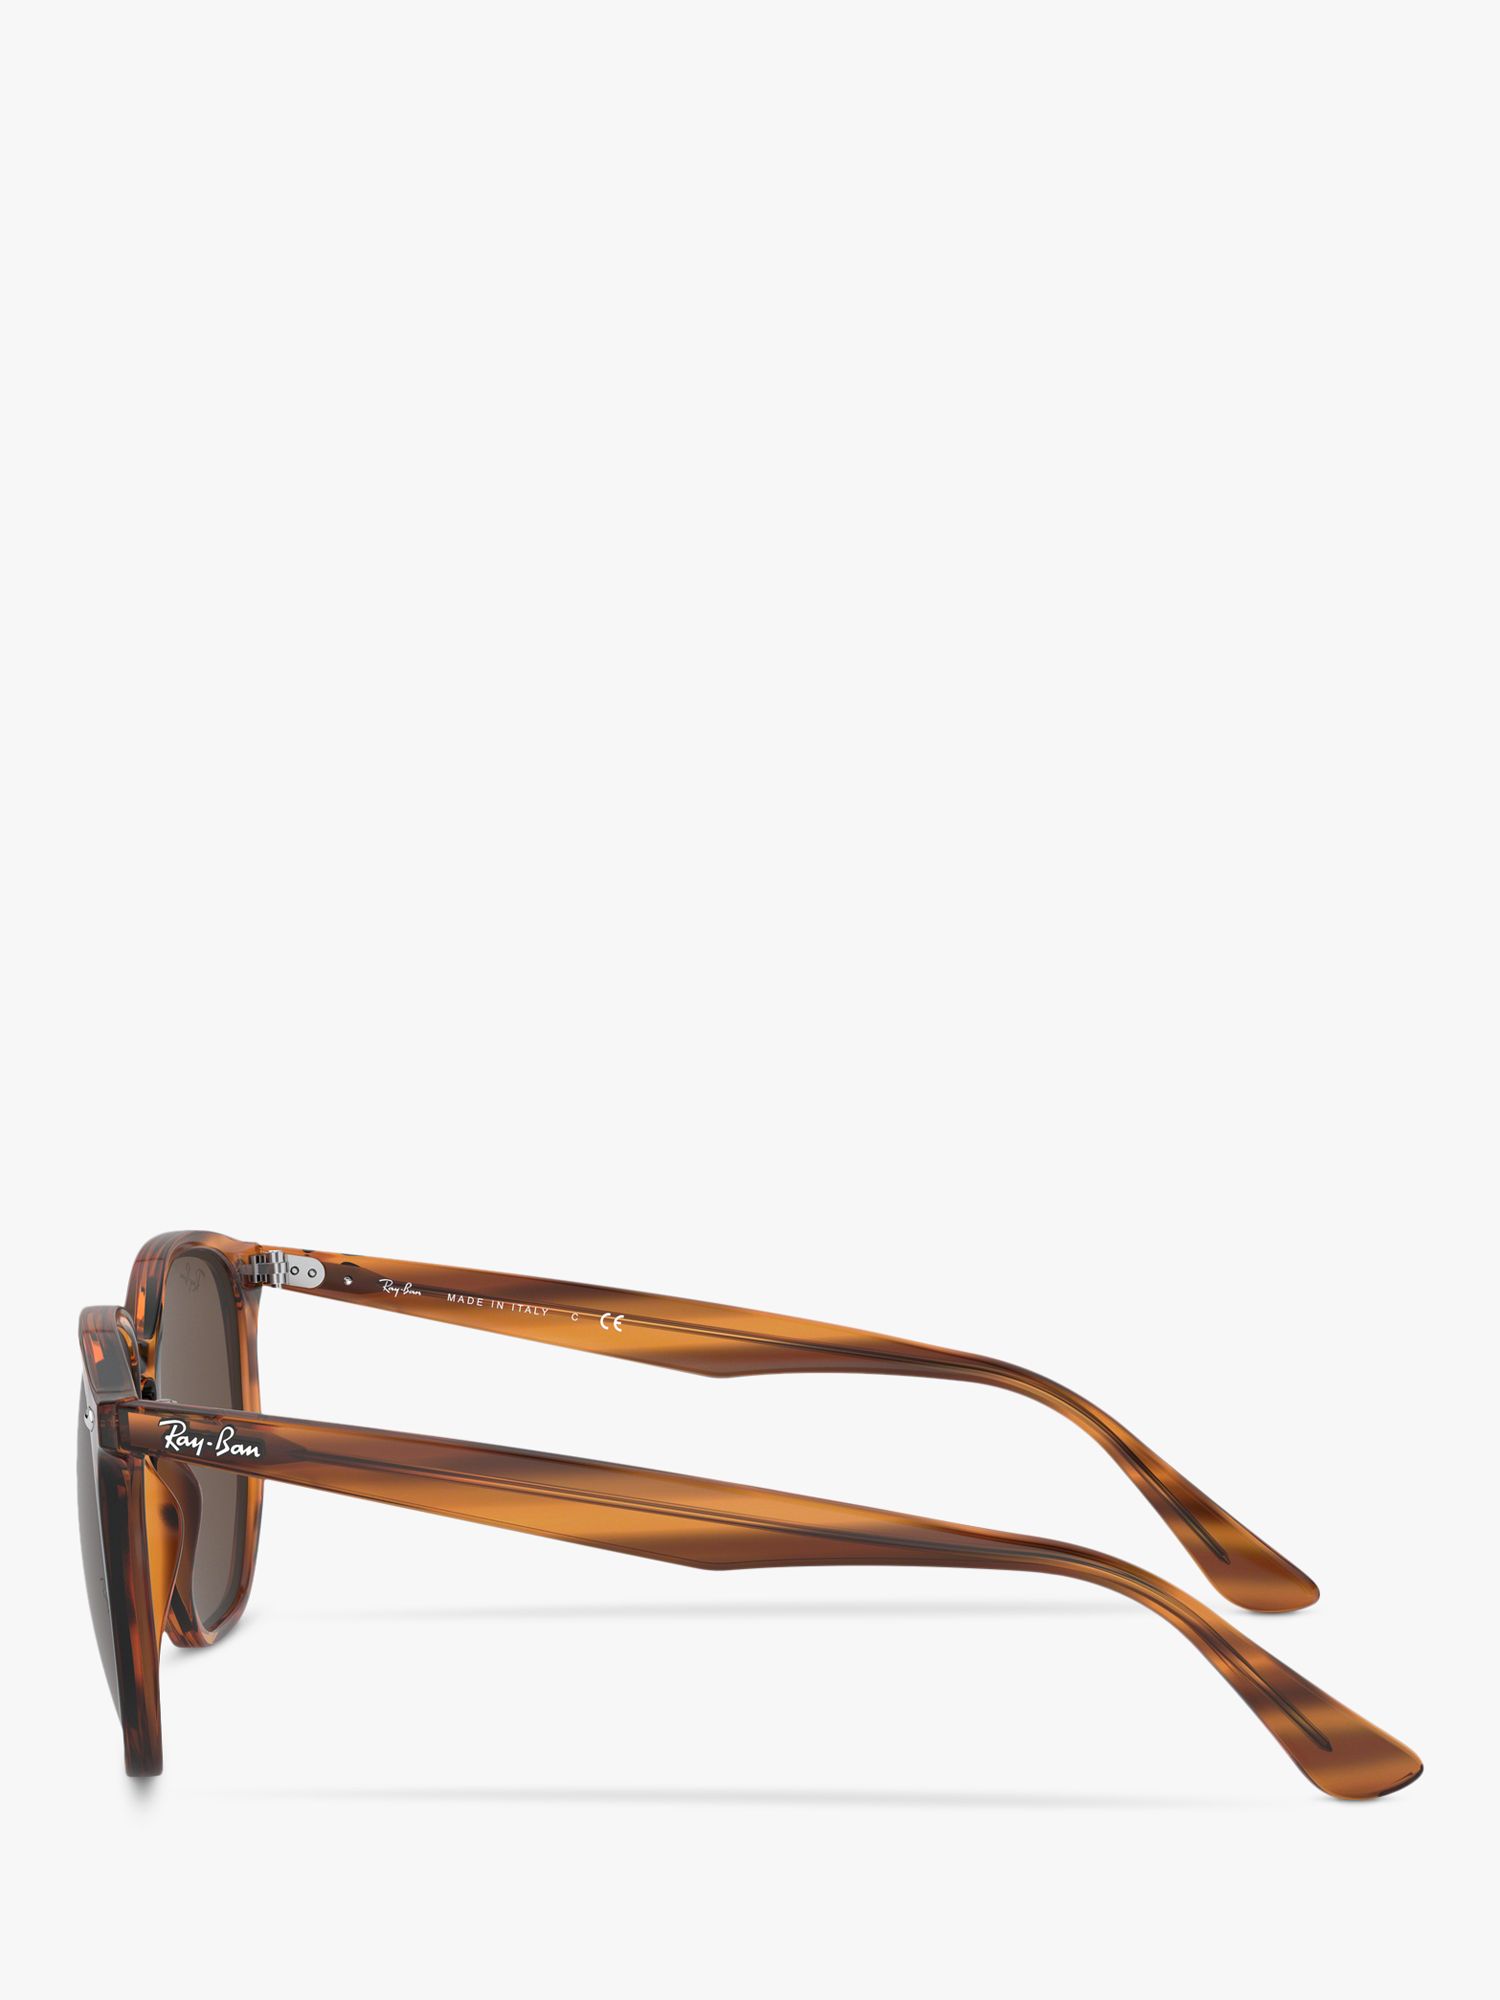 Ray-Ban RB4306 Unisex Oval Sunglasses, Havana/Brown